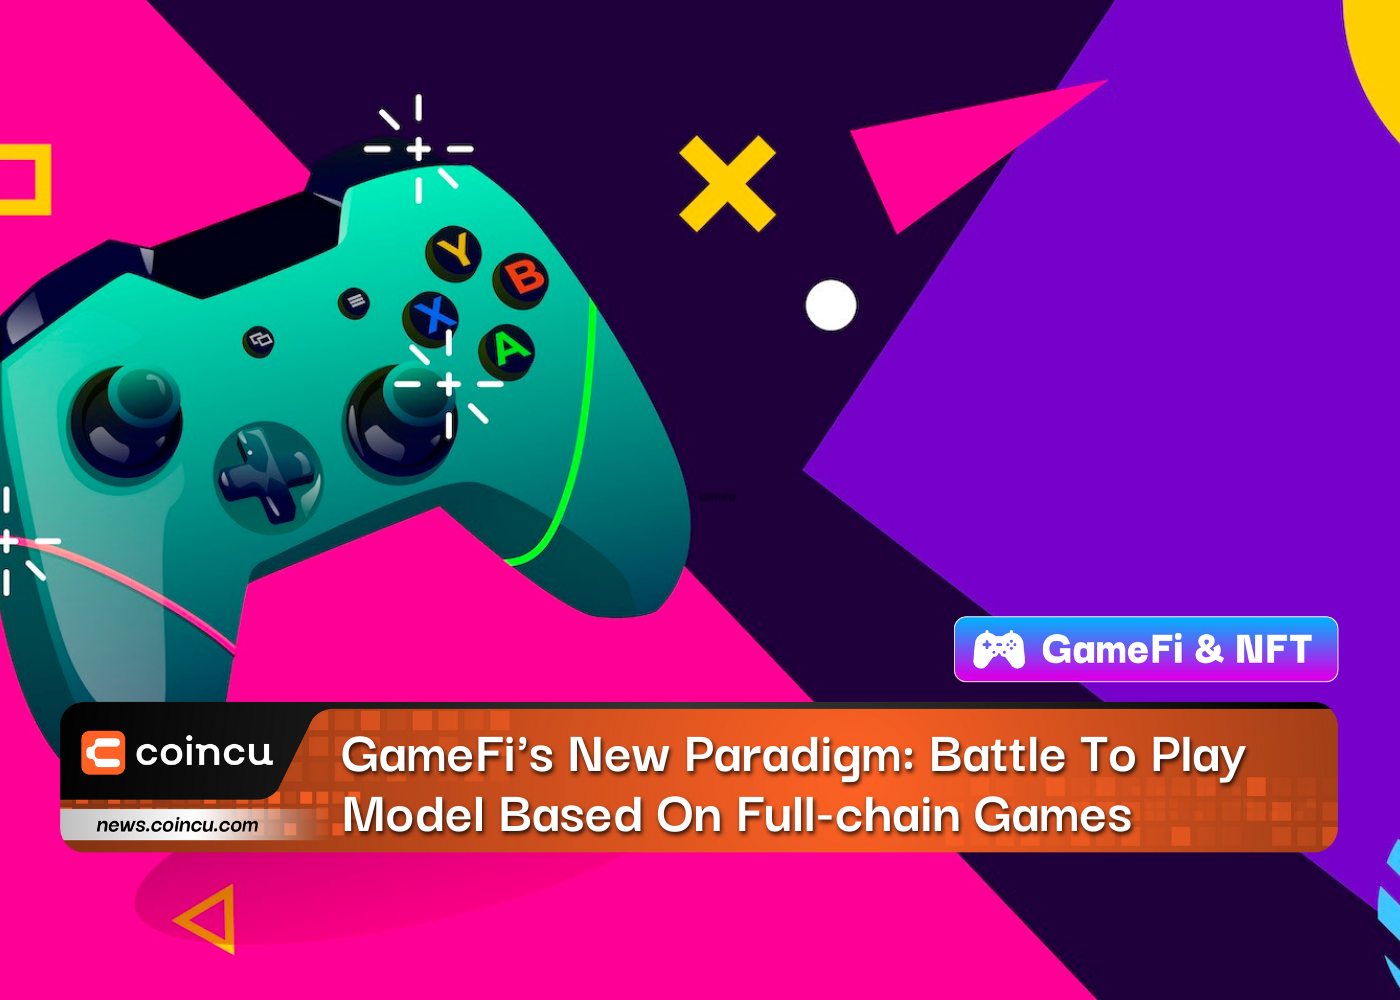 GameFi's New Paradigm: Battle To Play Model Based On Full-chain Games